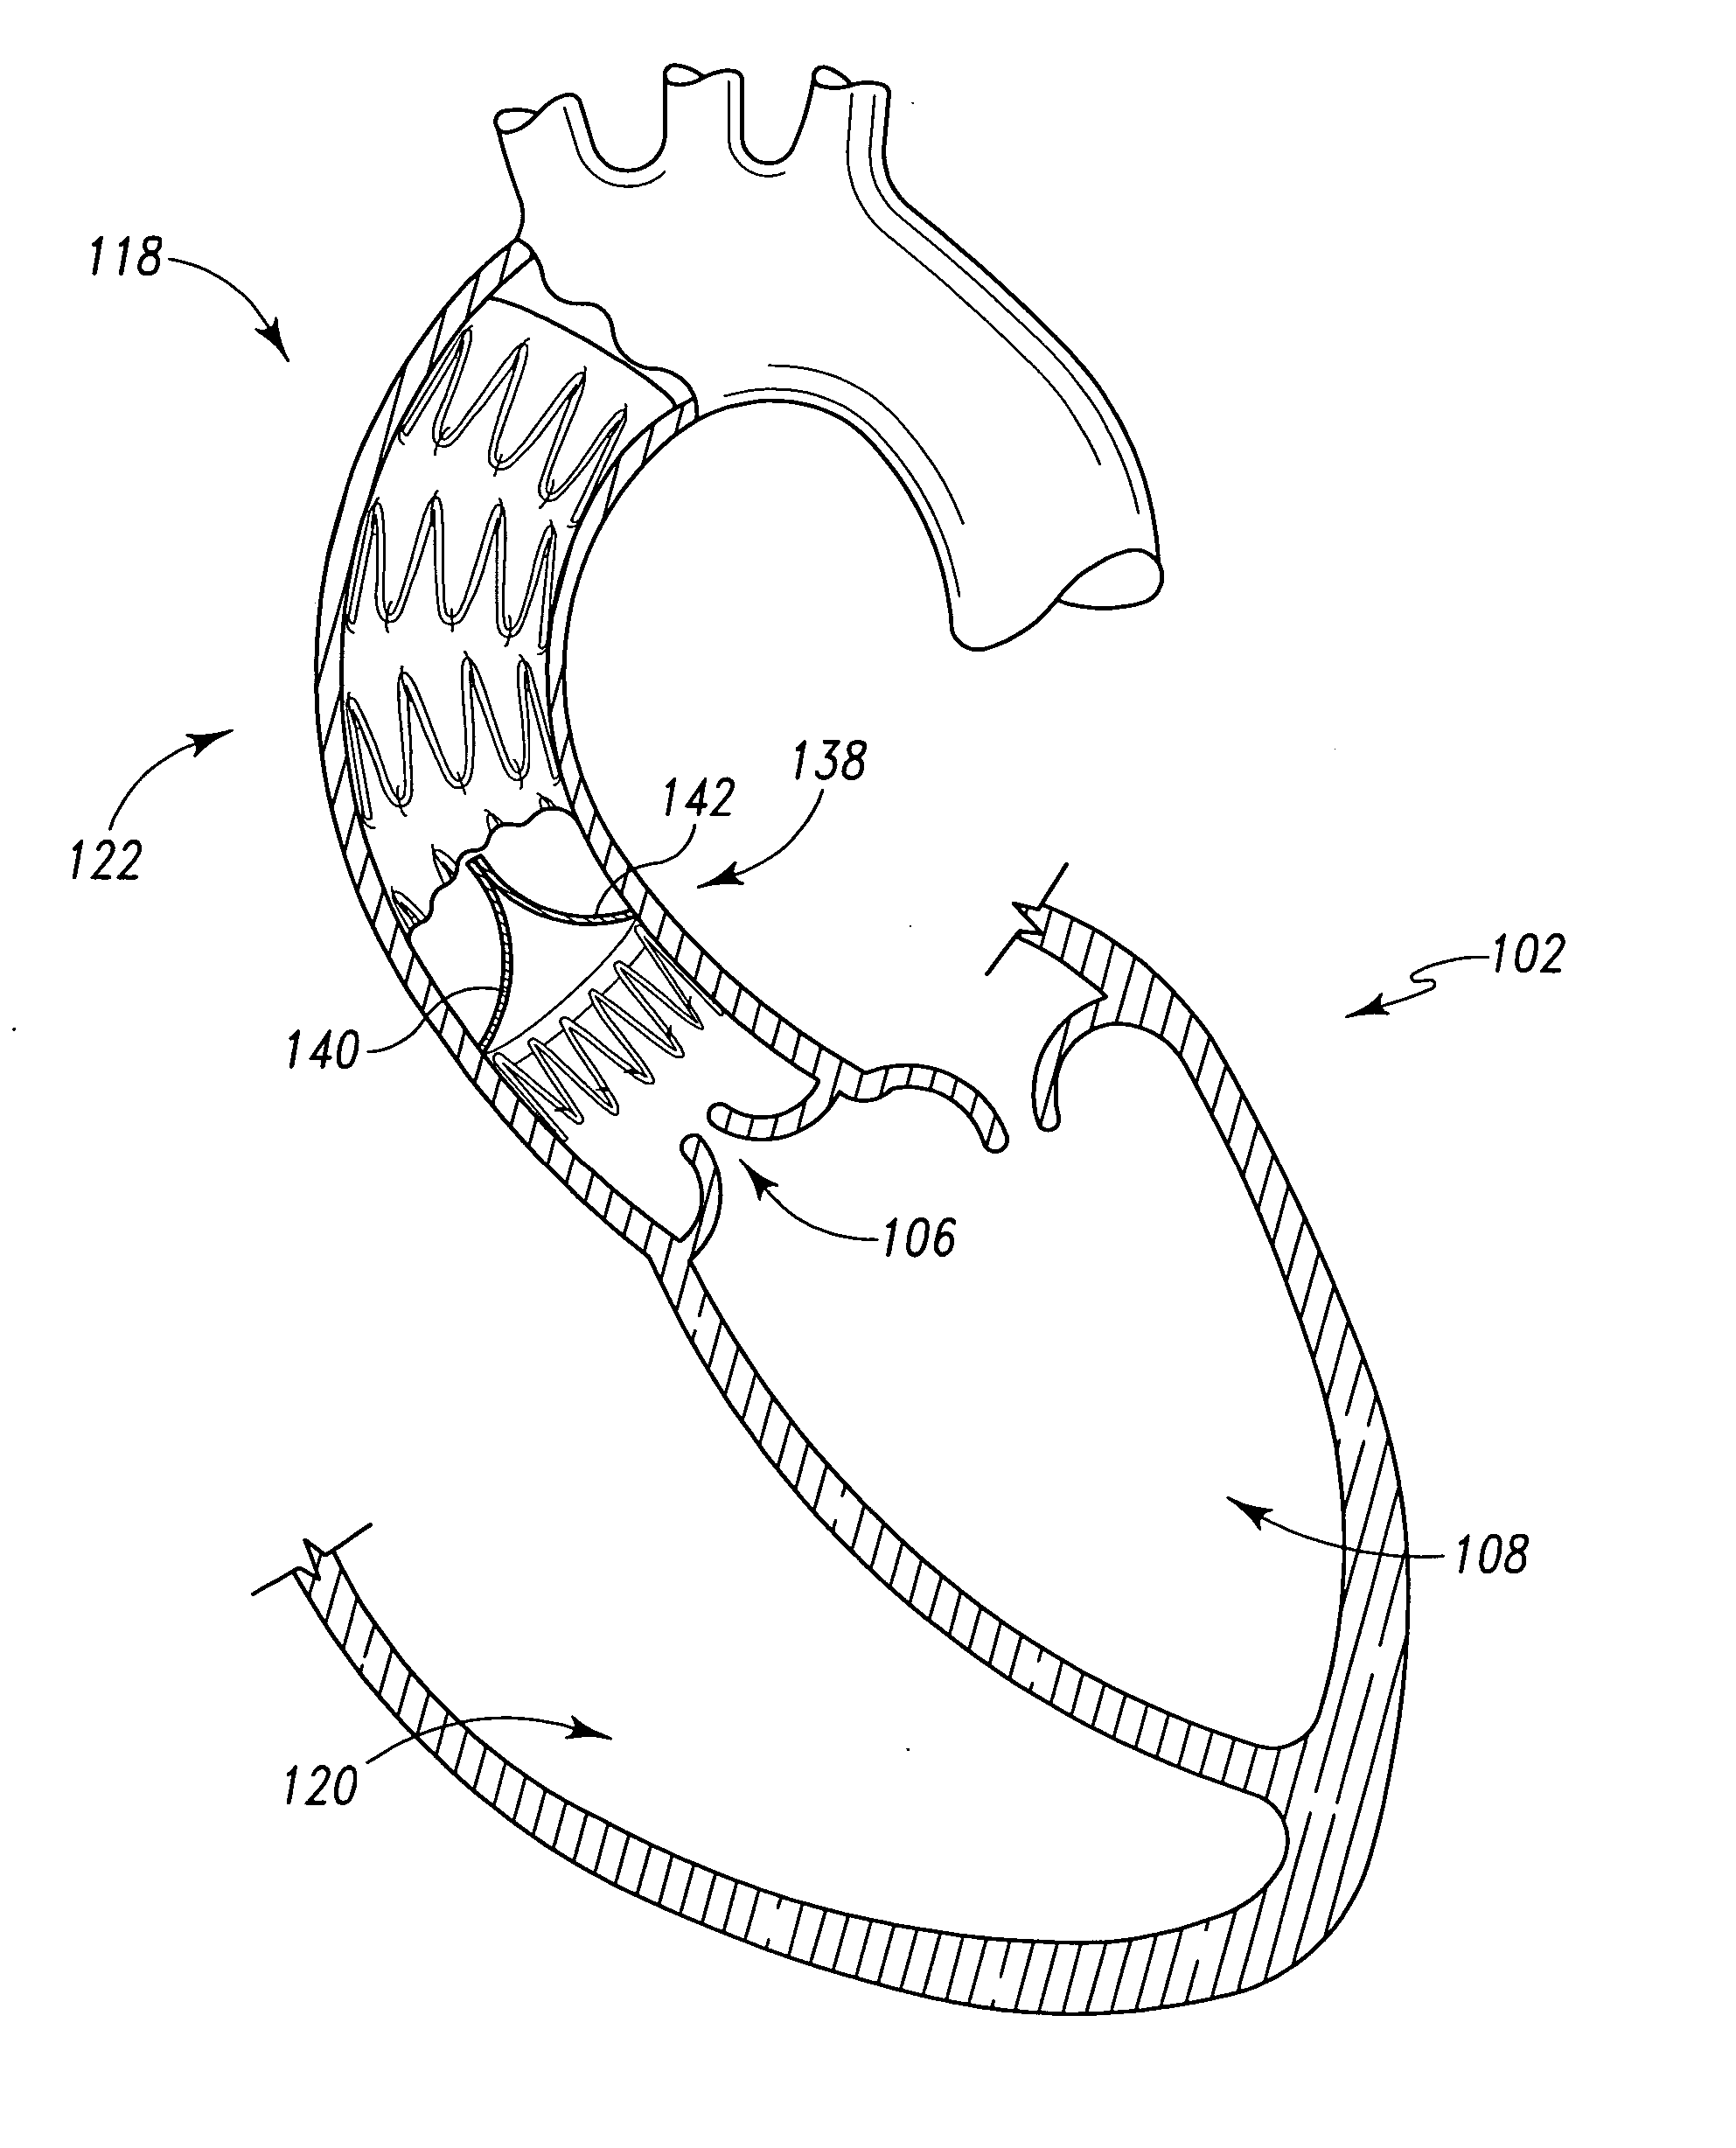 Endoluminal graft with a prosthetic valve